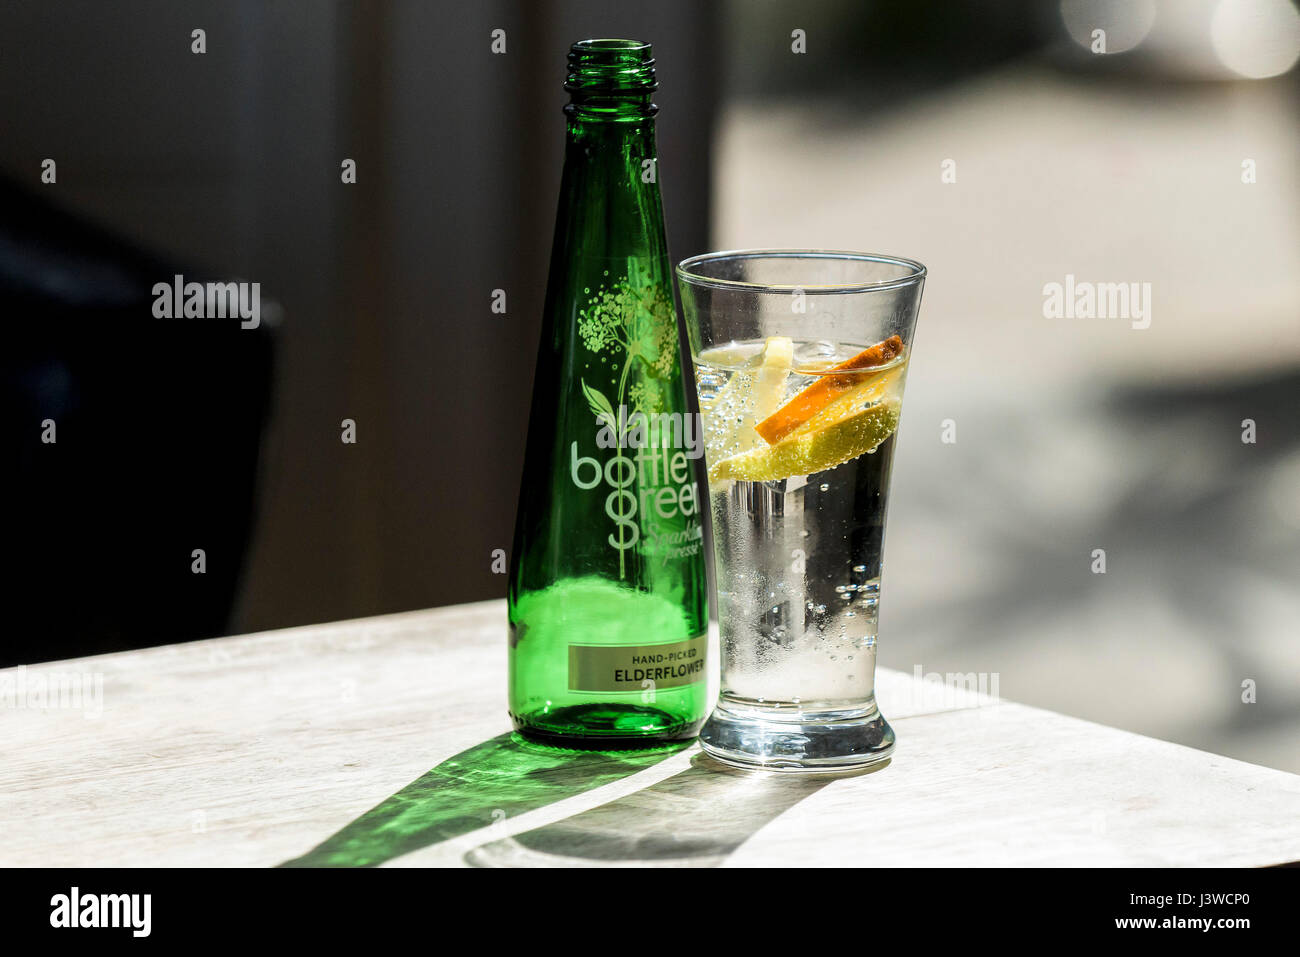 Bottle Green sparkling water Elderflower Brands Logo Refreshing drink Glass Summer drink Refreshment Stock Photo